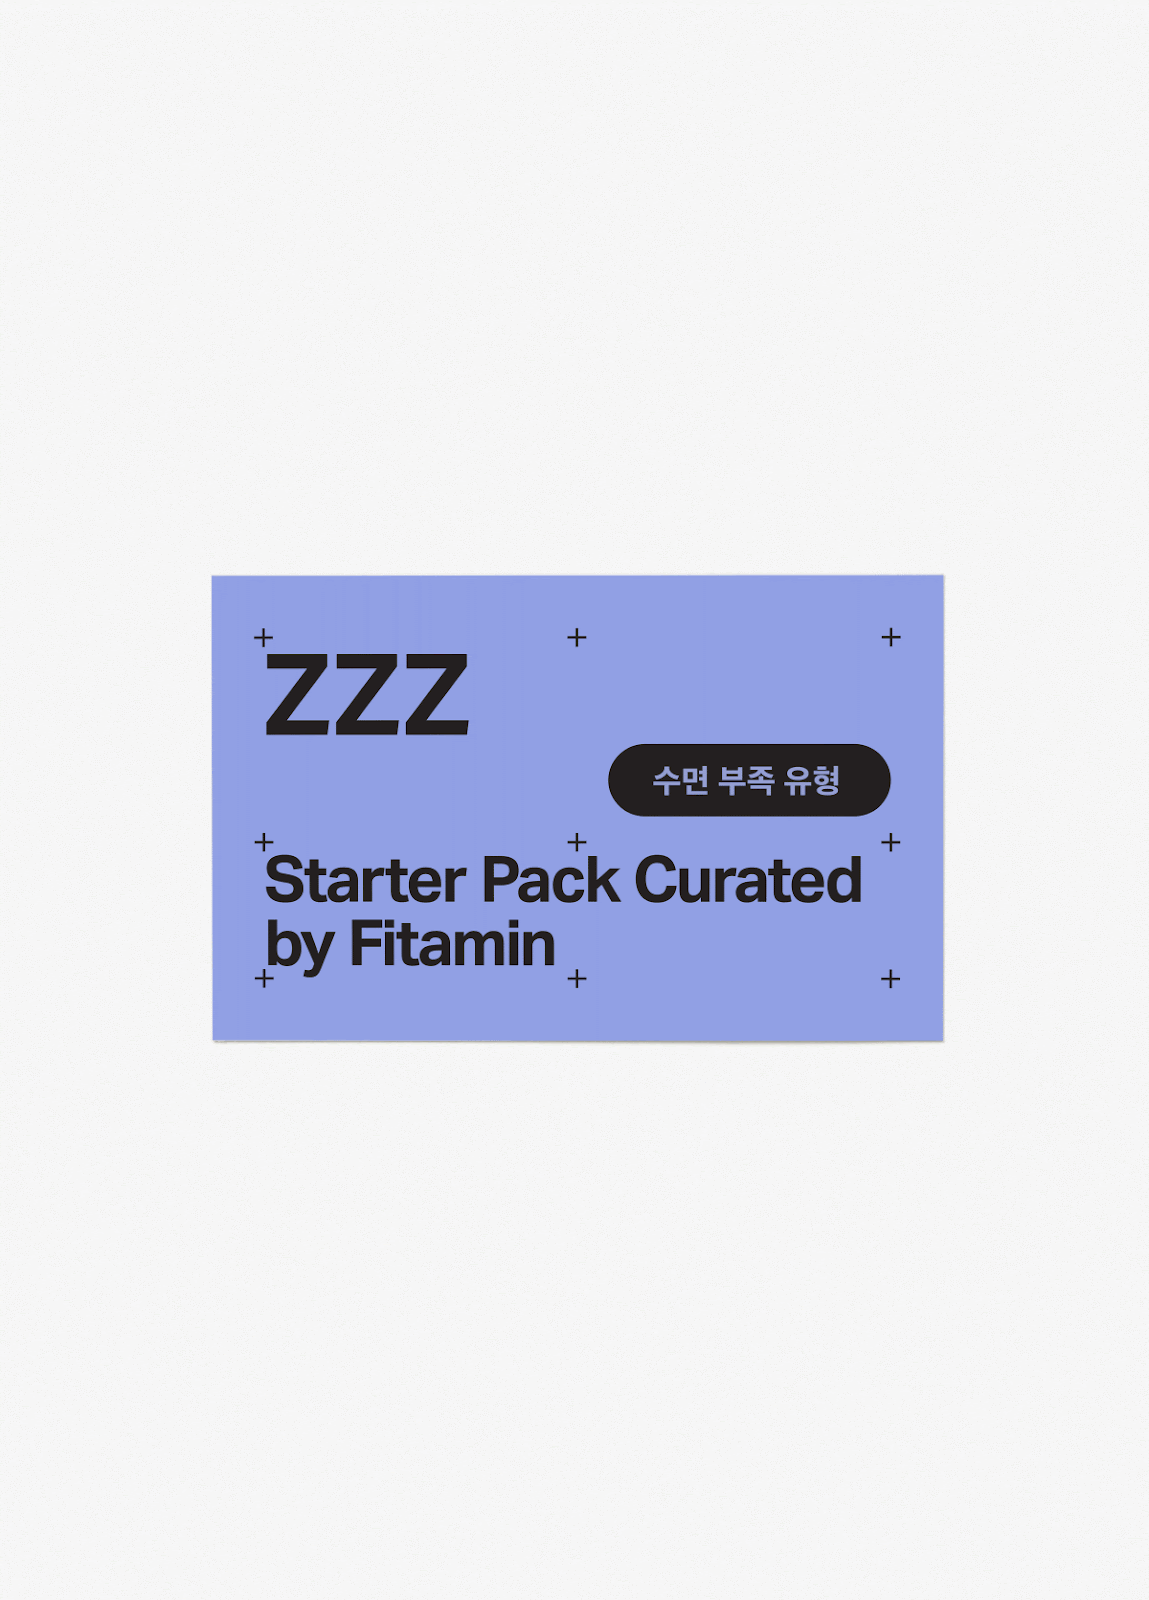 Fitamin保健品包装设计